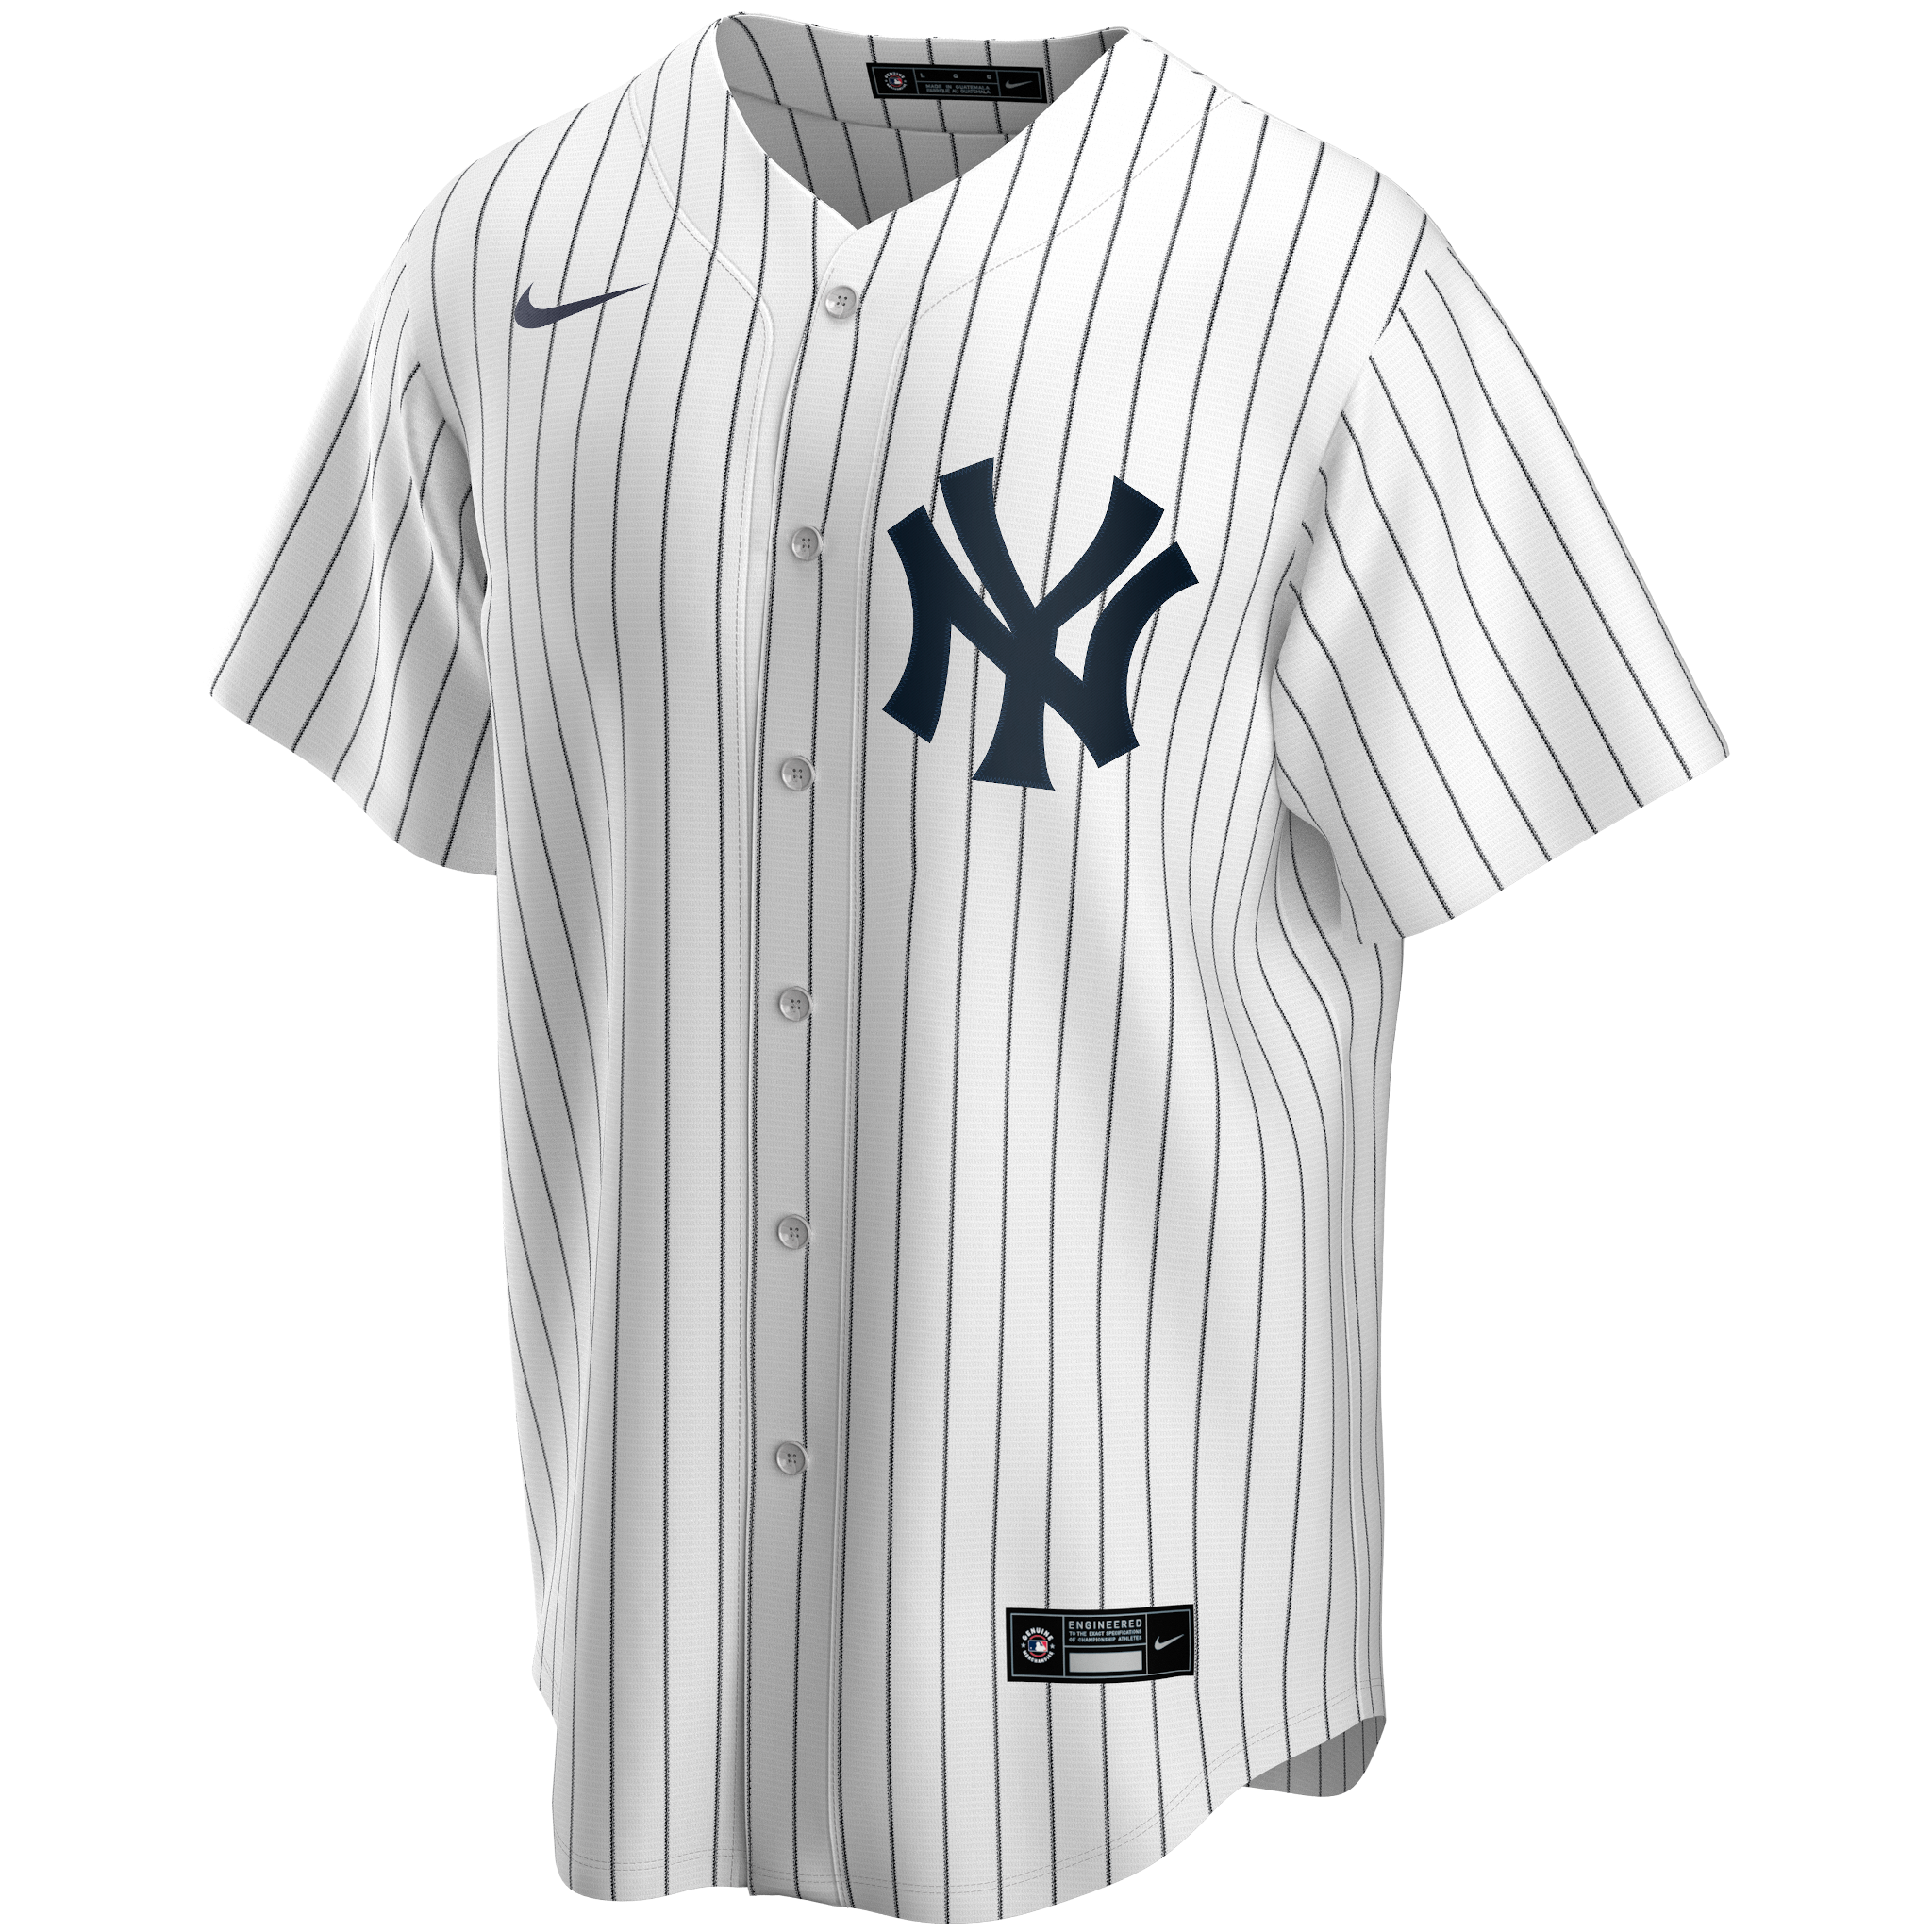 Yankees Jorge Posada 3D sign art Jersey NY New York Baseball Judge stadium